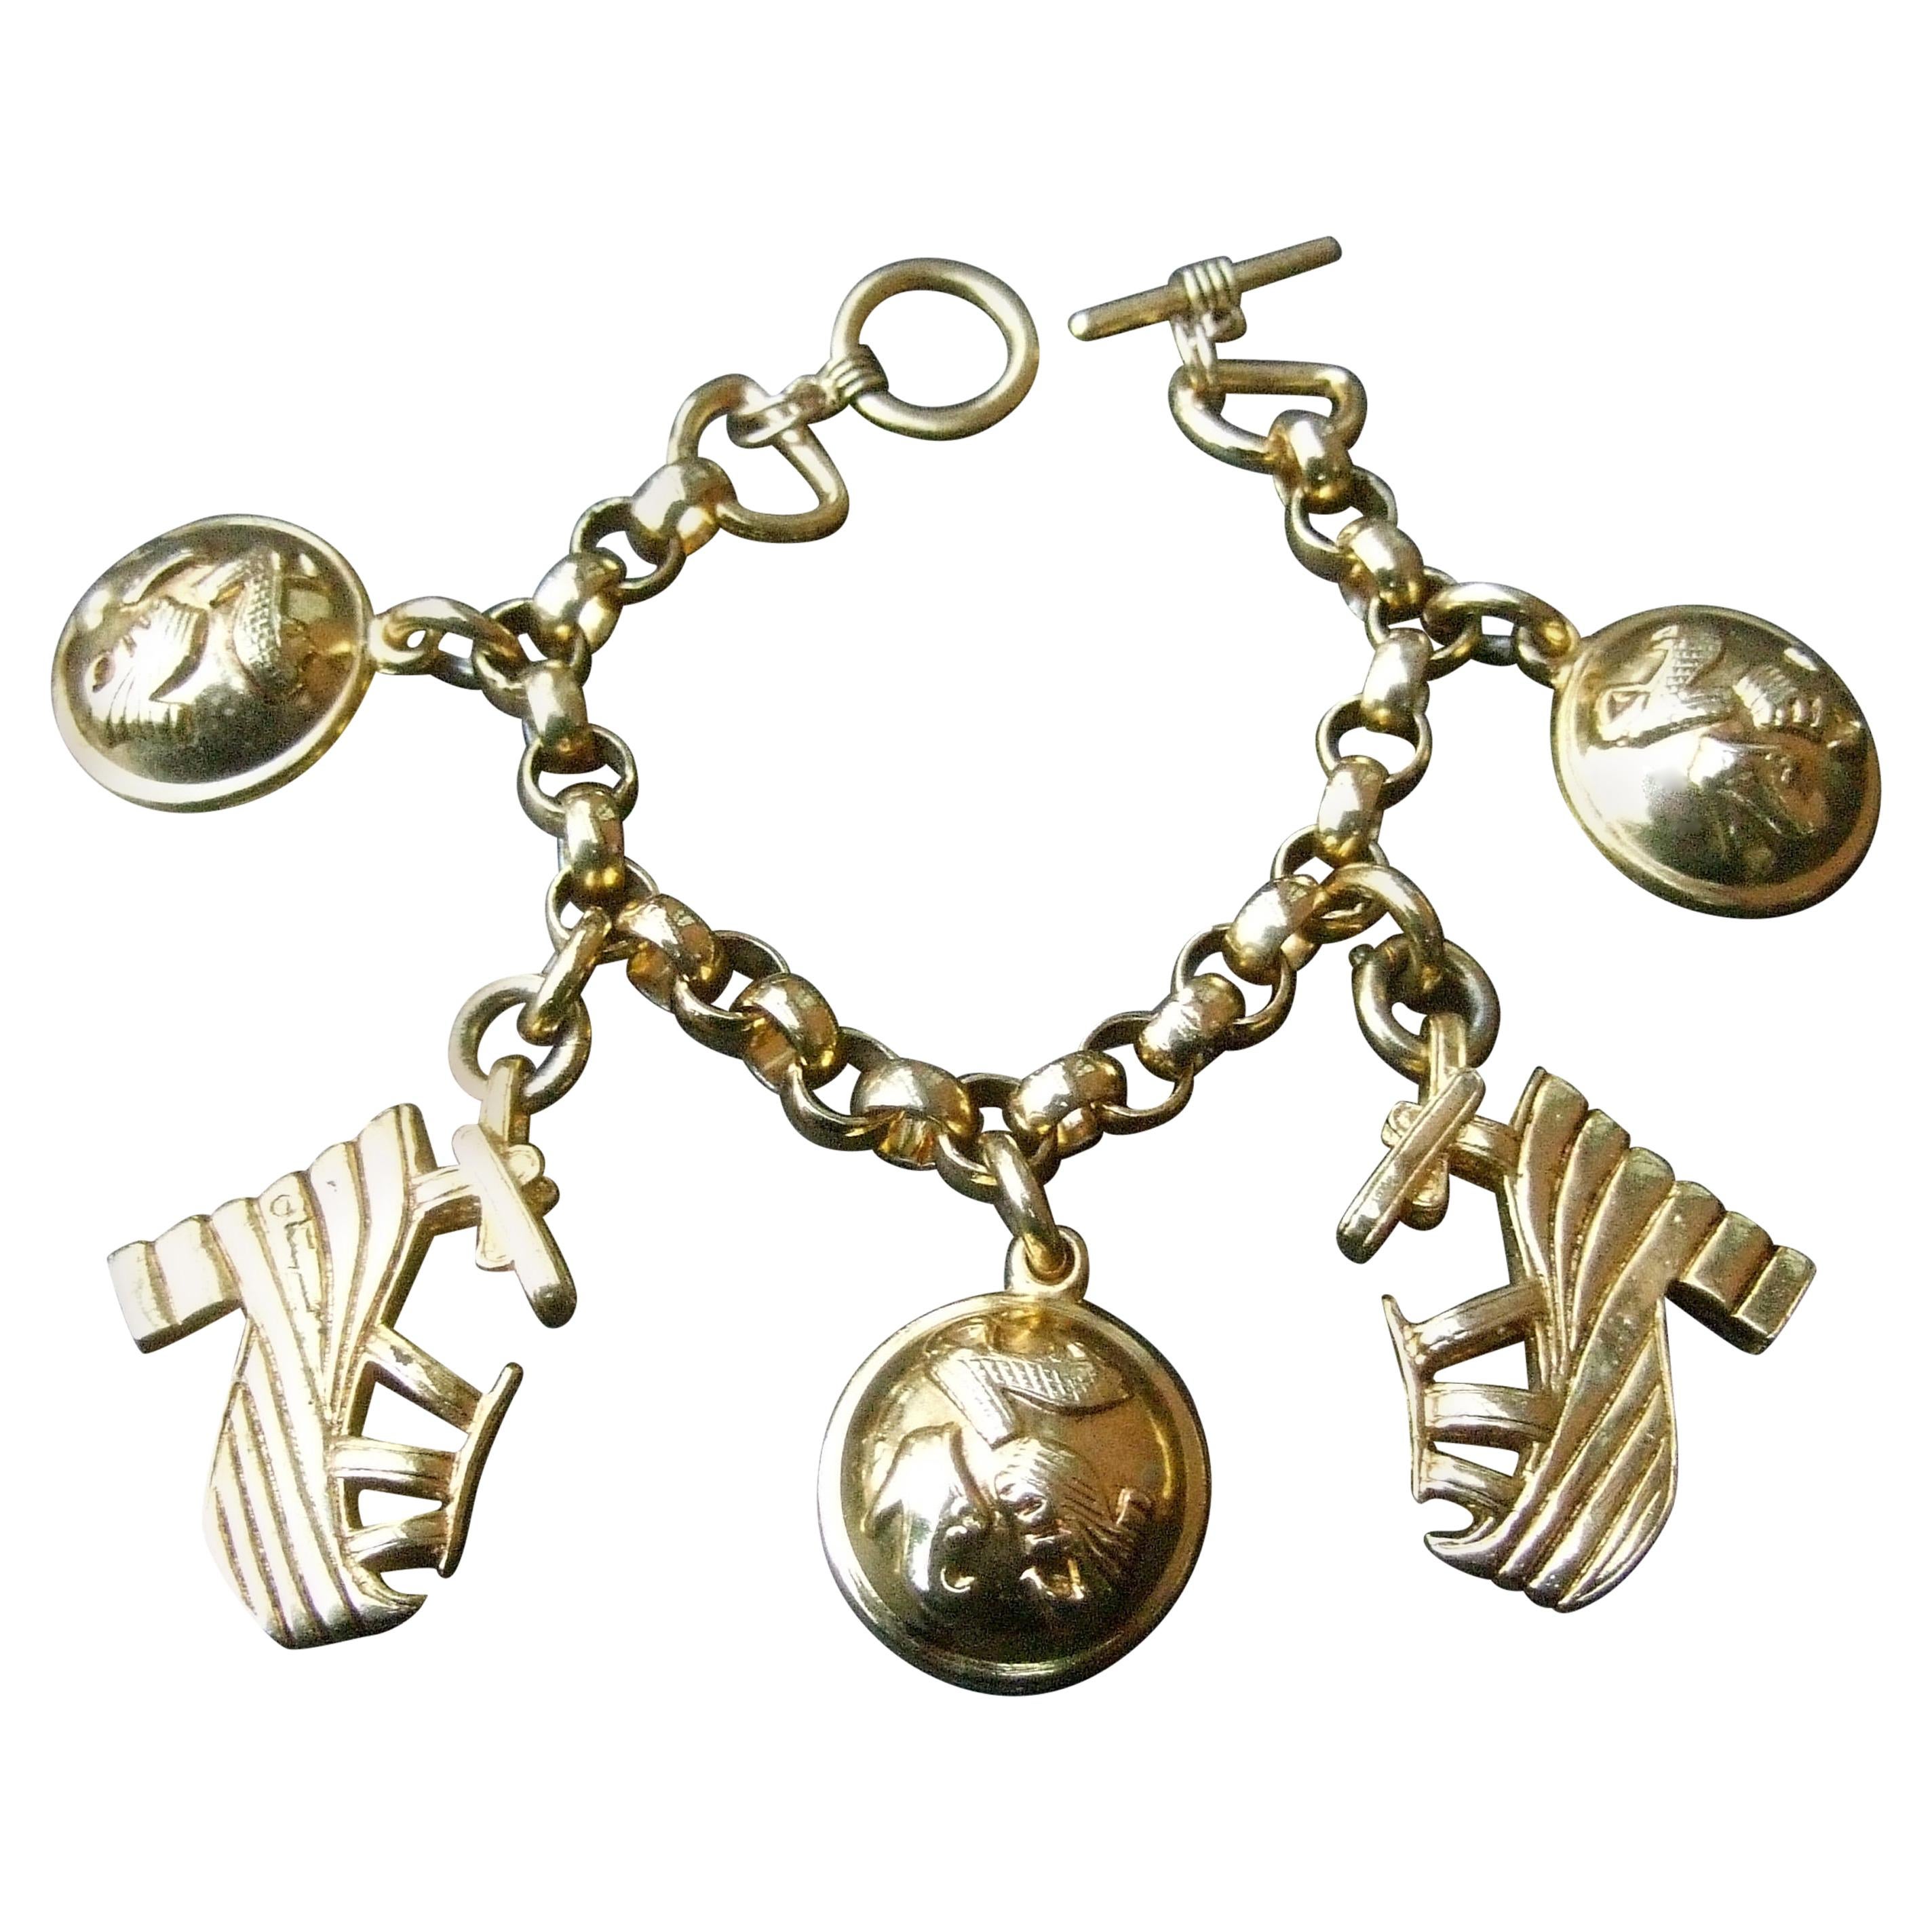 Salvatore Ferragamo Charm-Armband aus vergoldetem Metall mit Schuhmotiv ca. 1990er Jahre